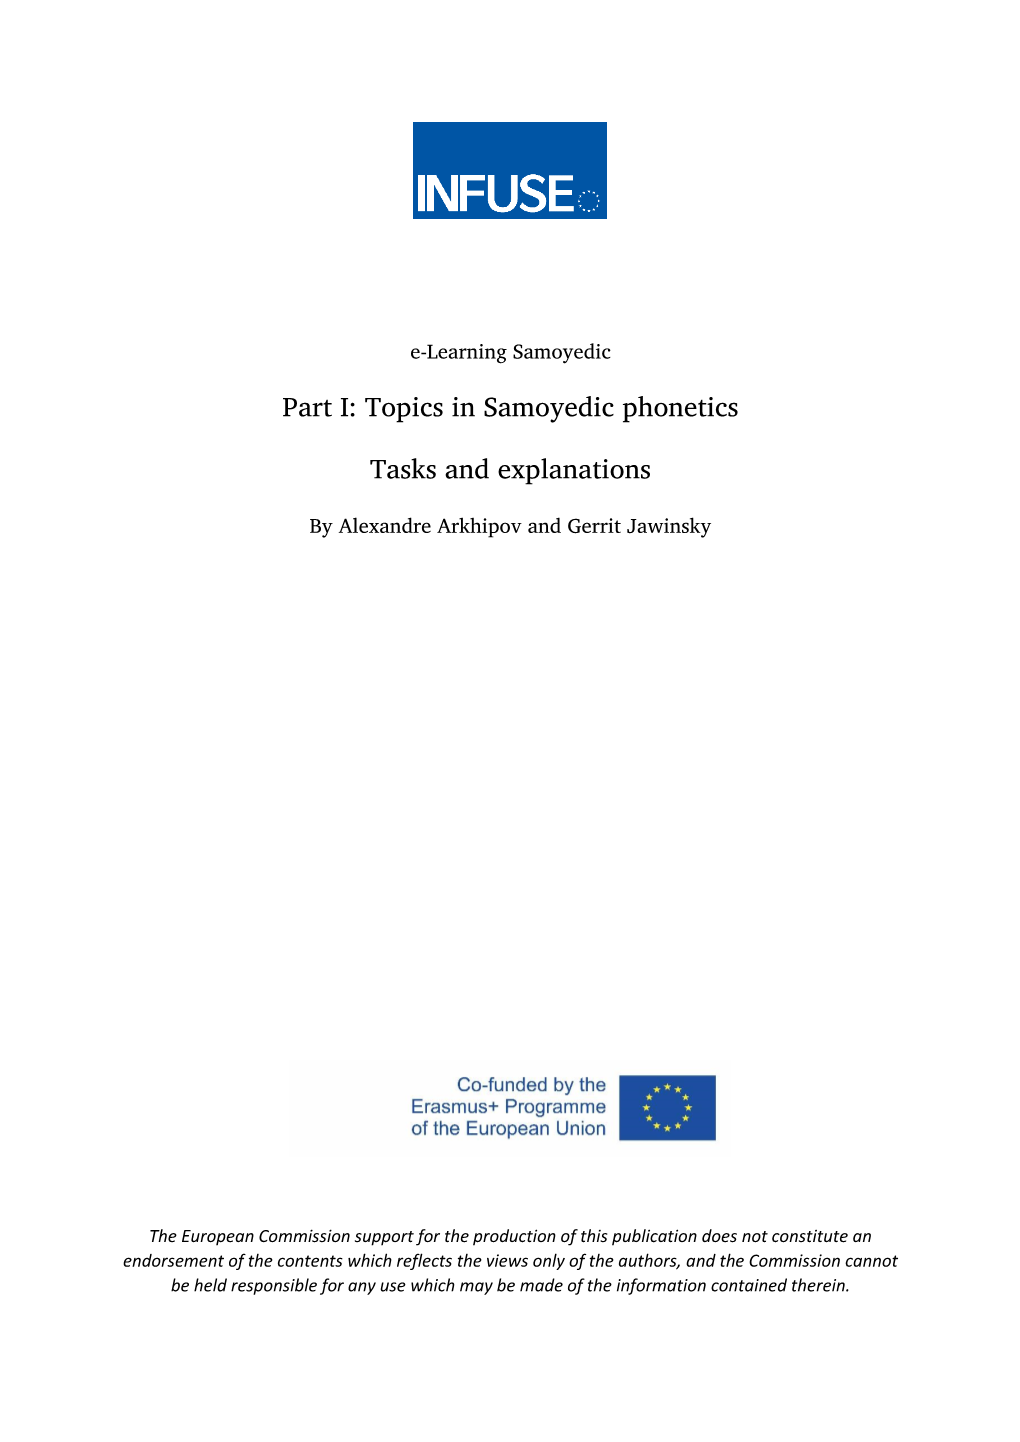 Part I: Topics in Samoyedic Phonetics Tasks and Explanations